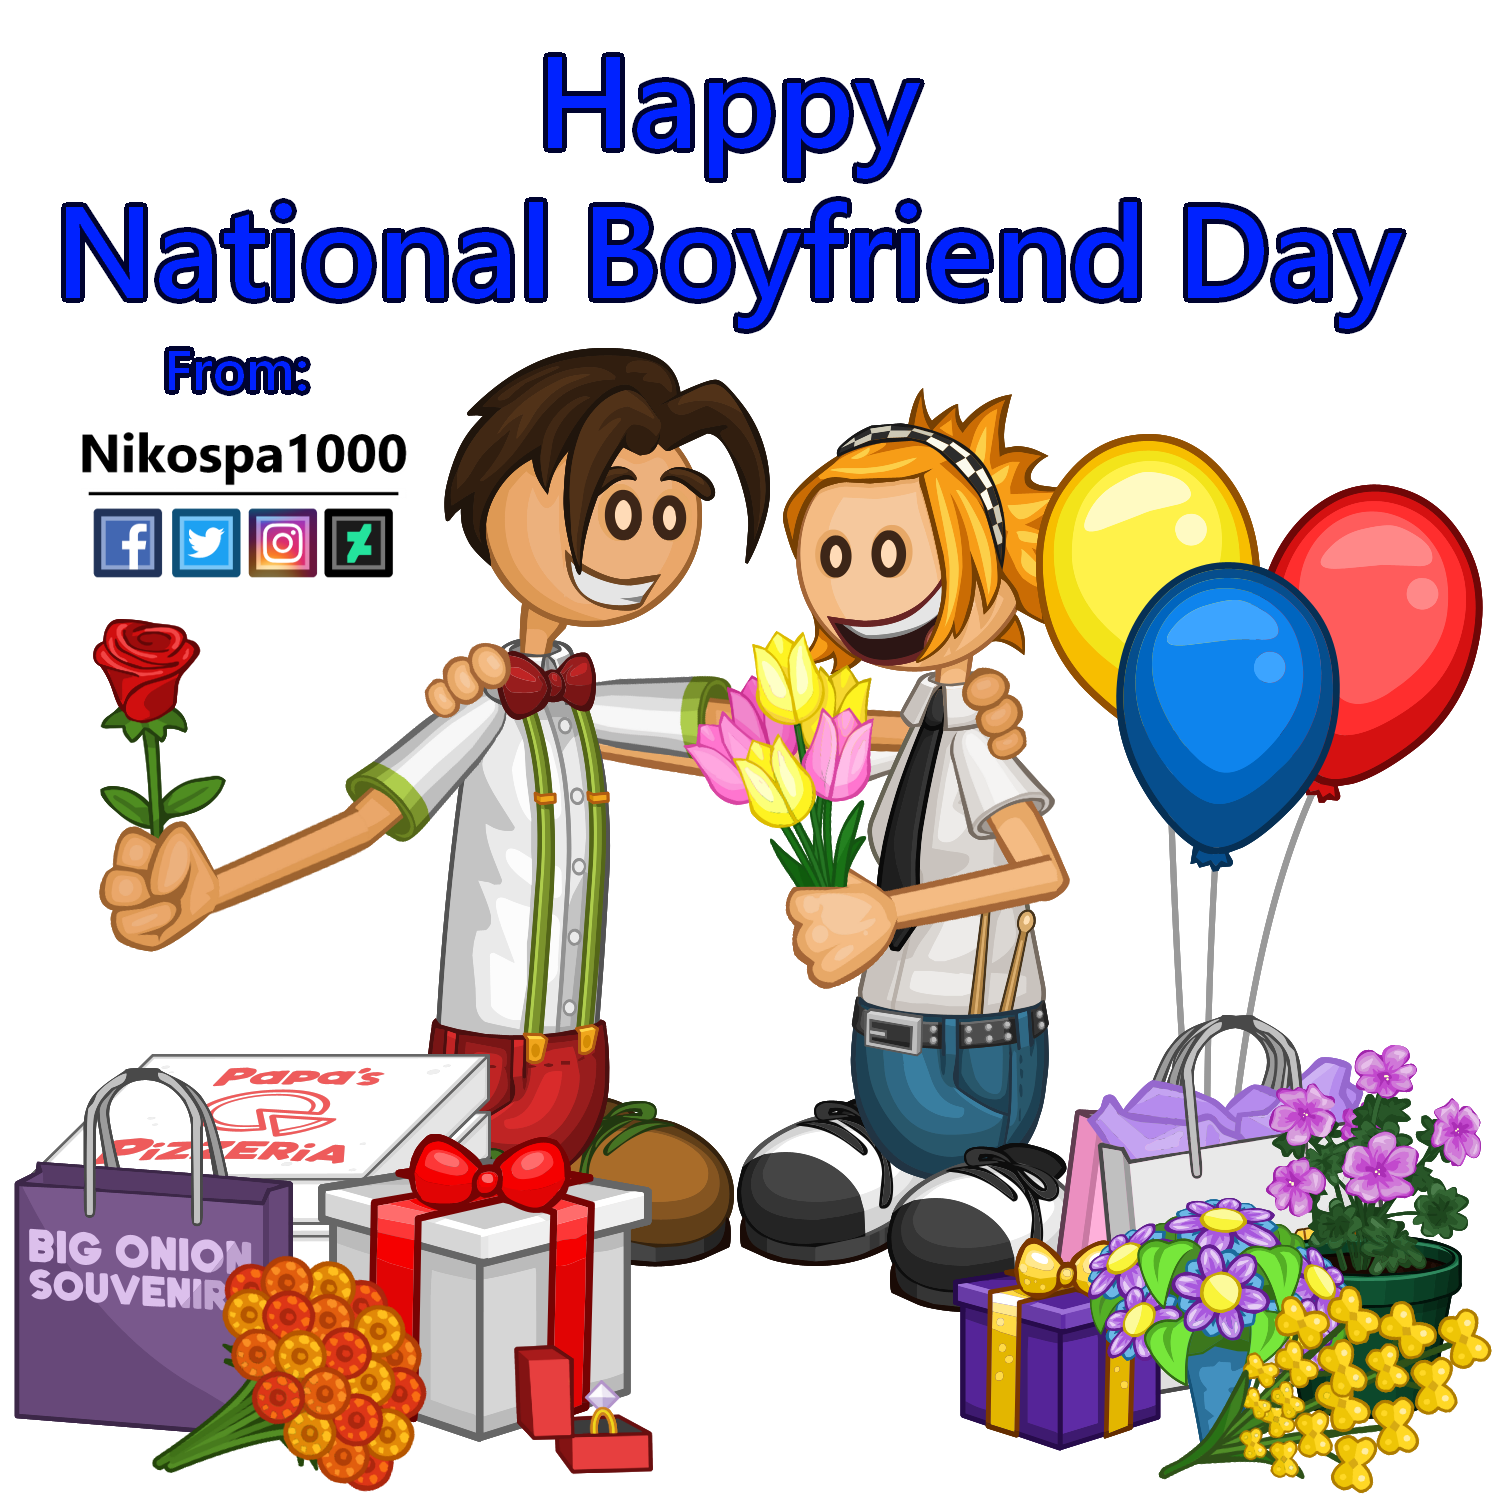 Happy National Boyfriend Day by Nikospa1000 on DeviantArt